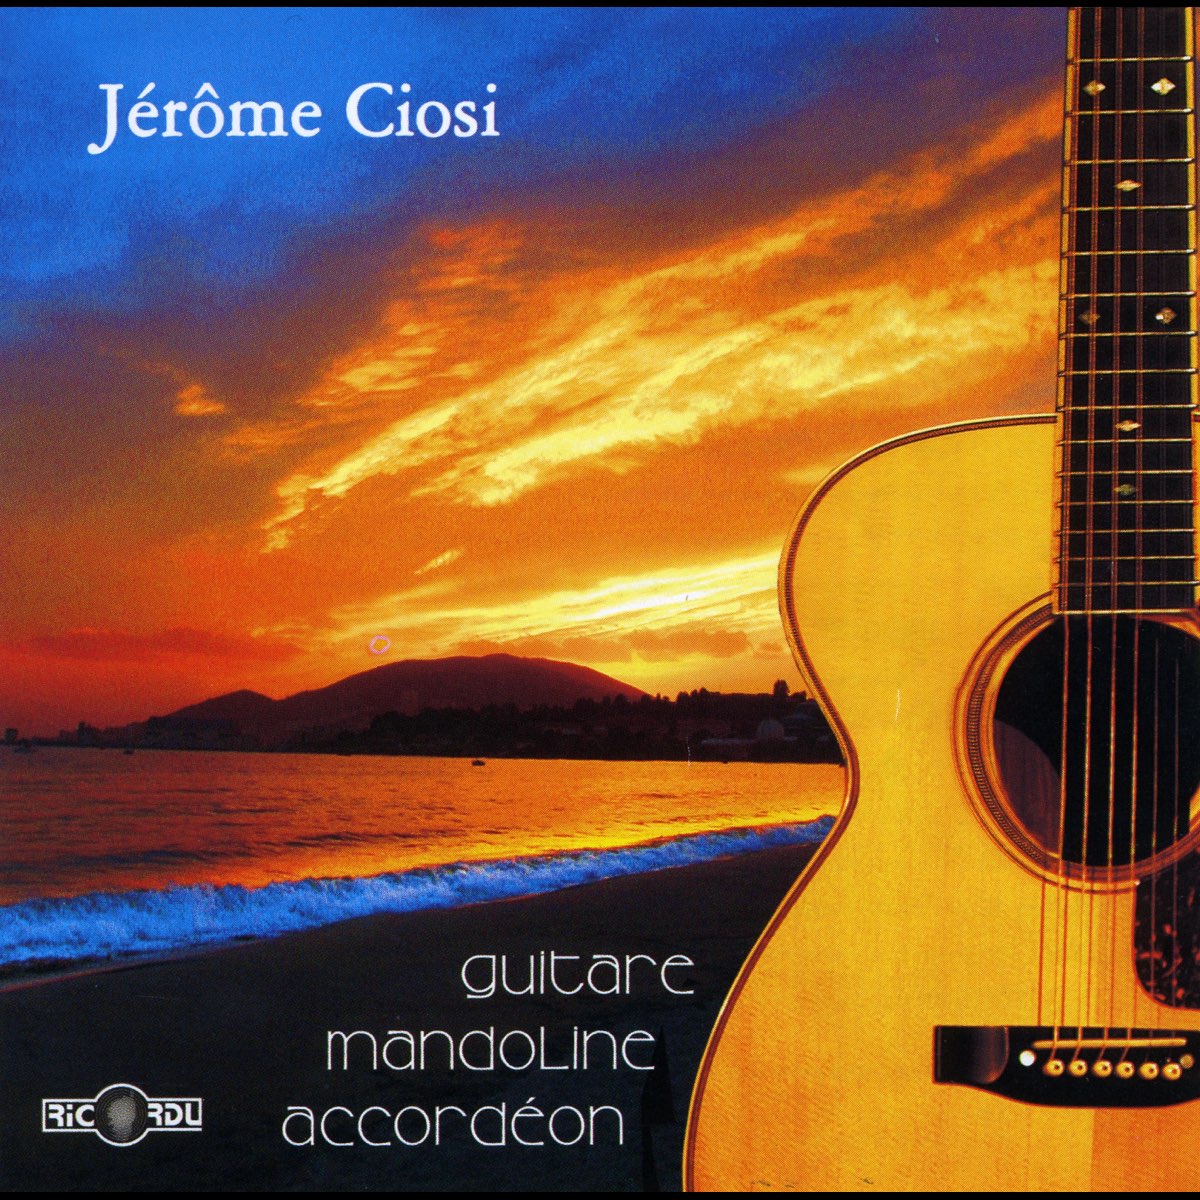 Guitare, mandoline, accordéon (Guitare corse, Musica nostra) – Album par  Jérôme Ciosi – Apple Music